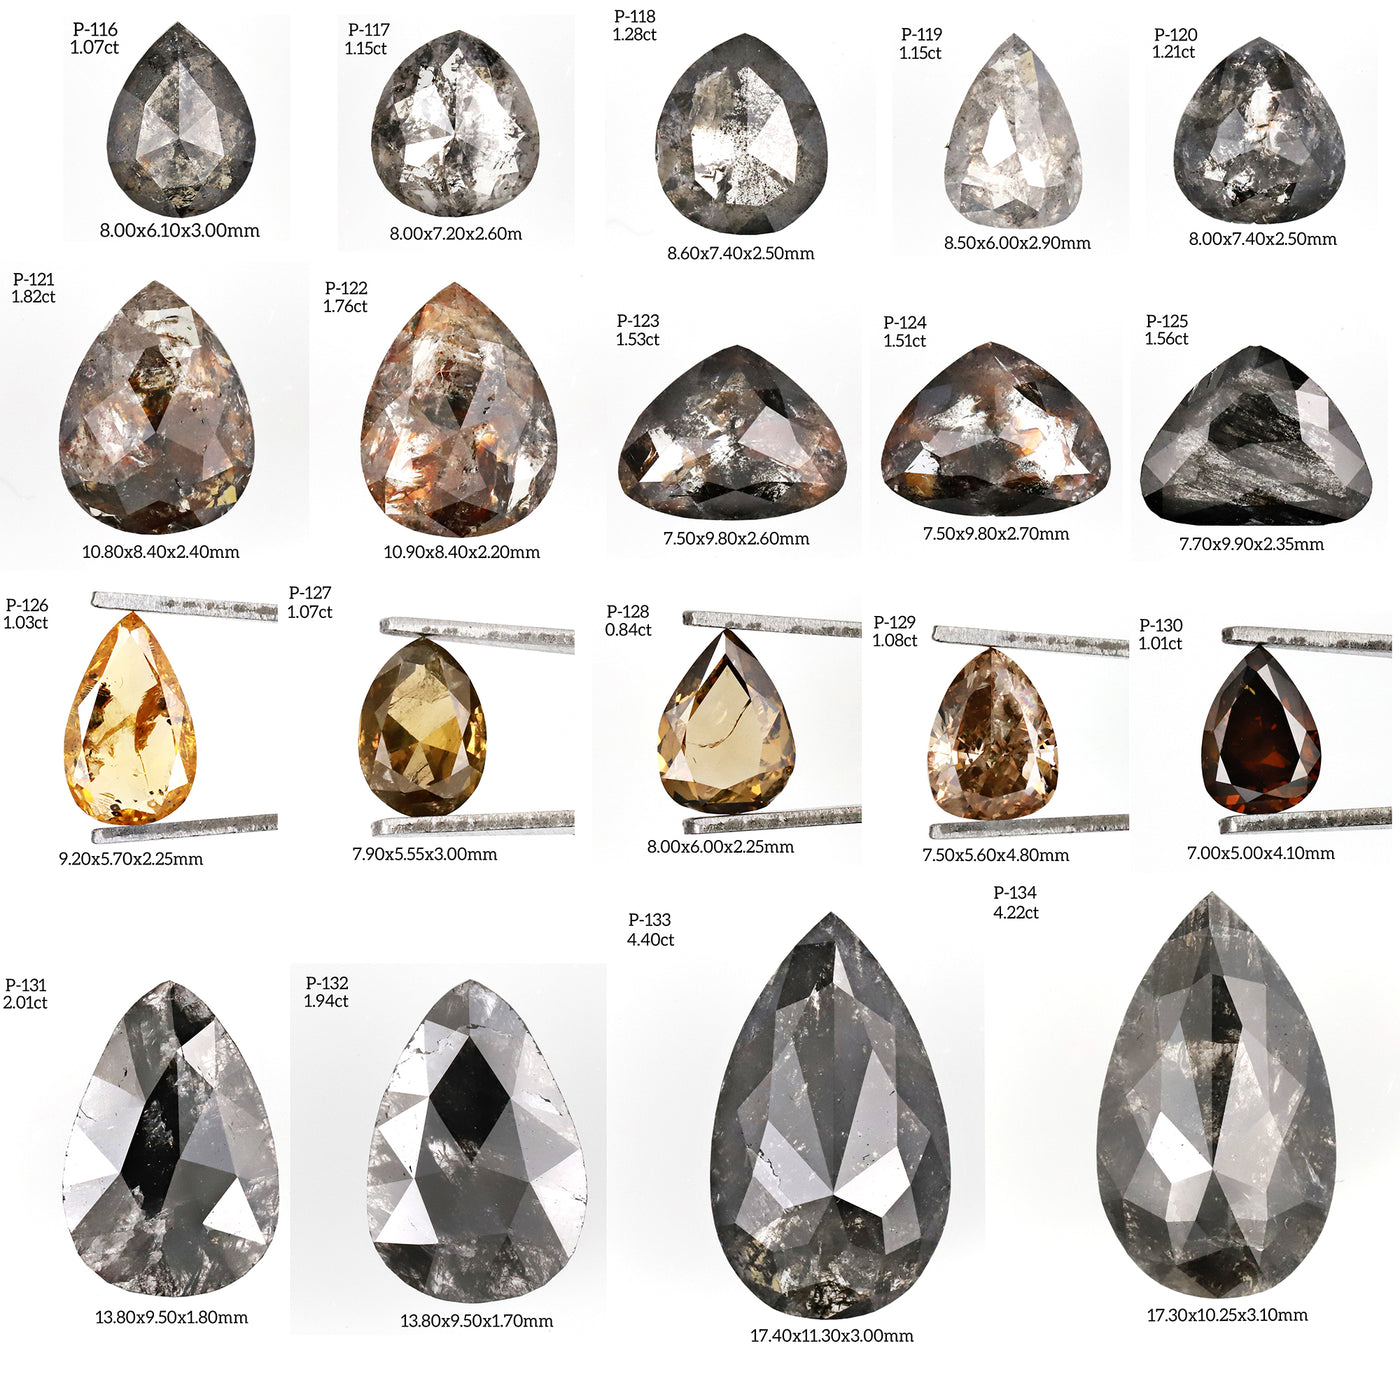 P125 - Salt and pepper pear diamond